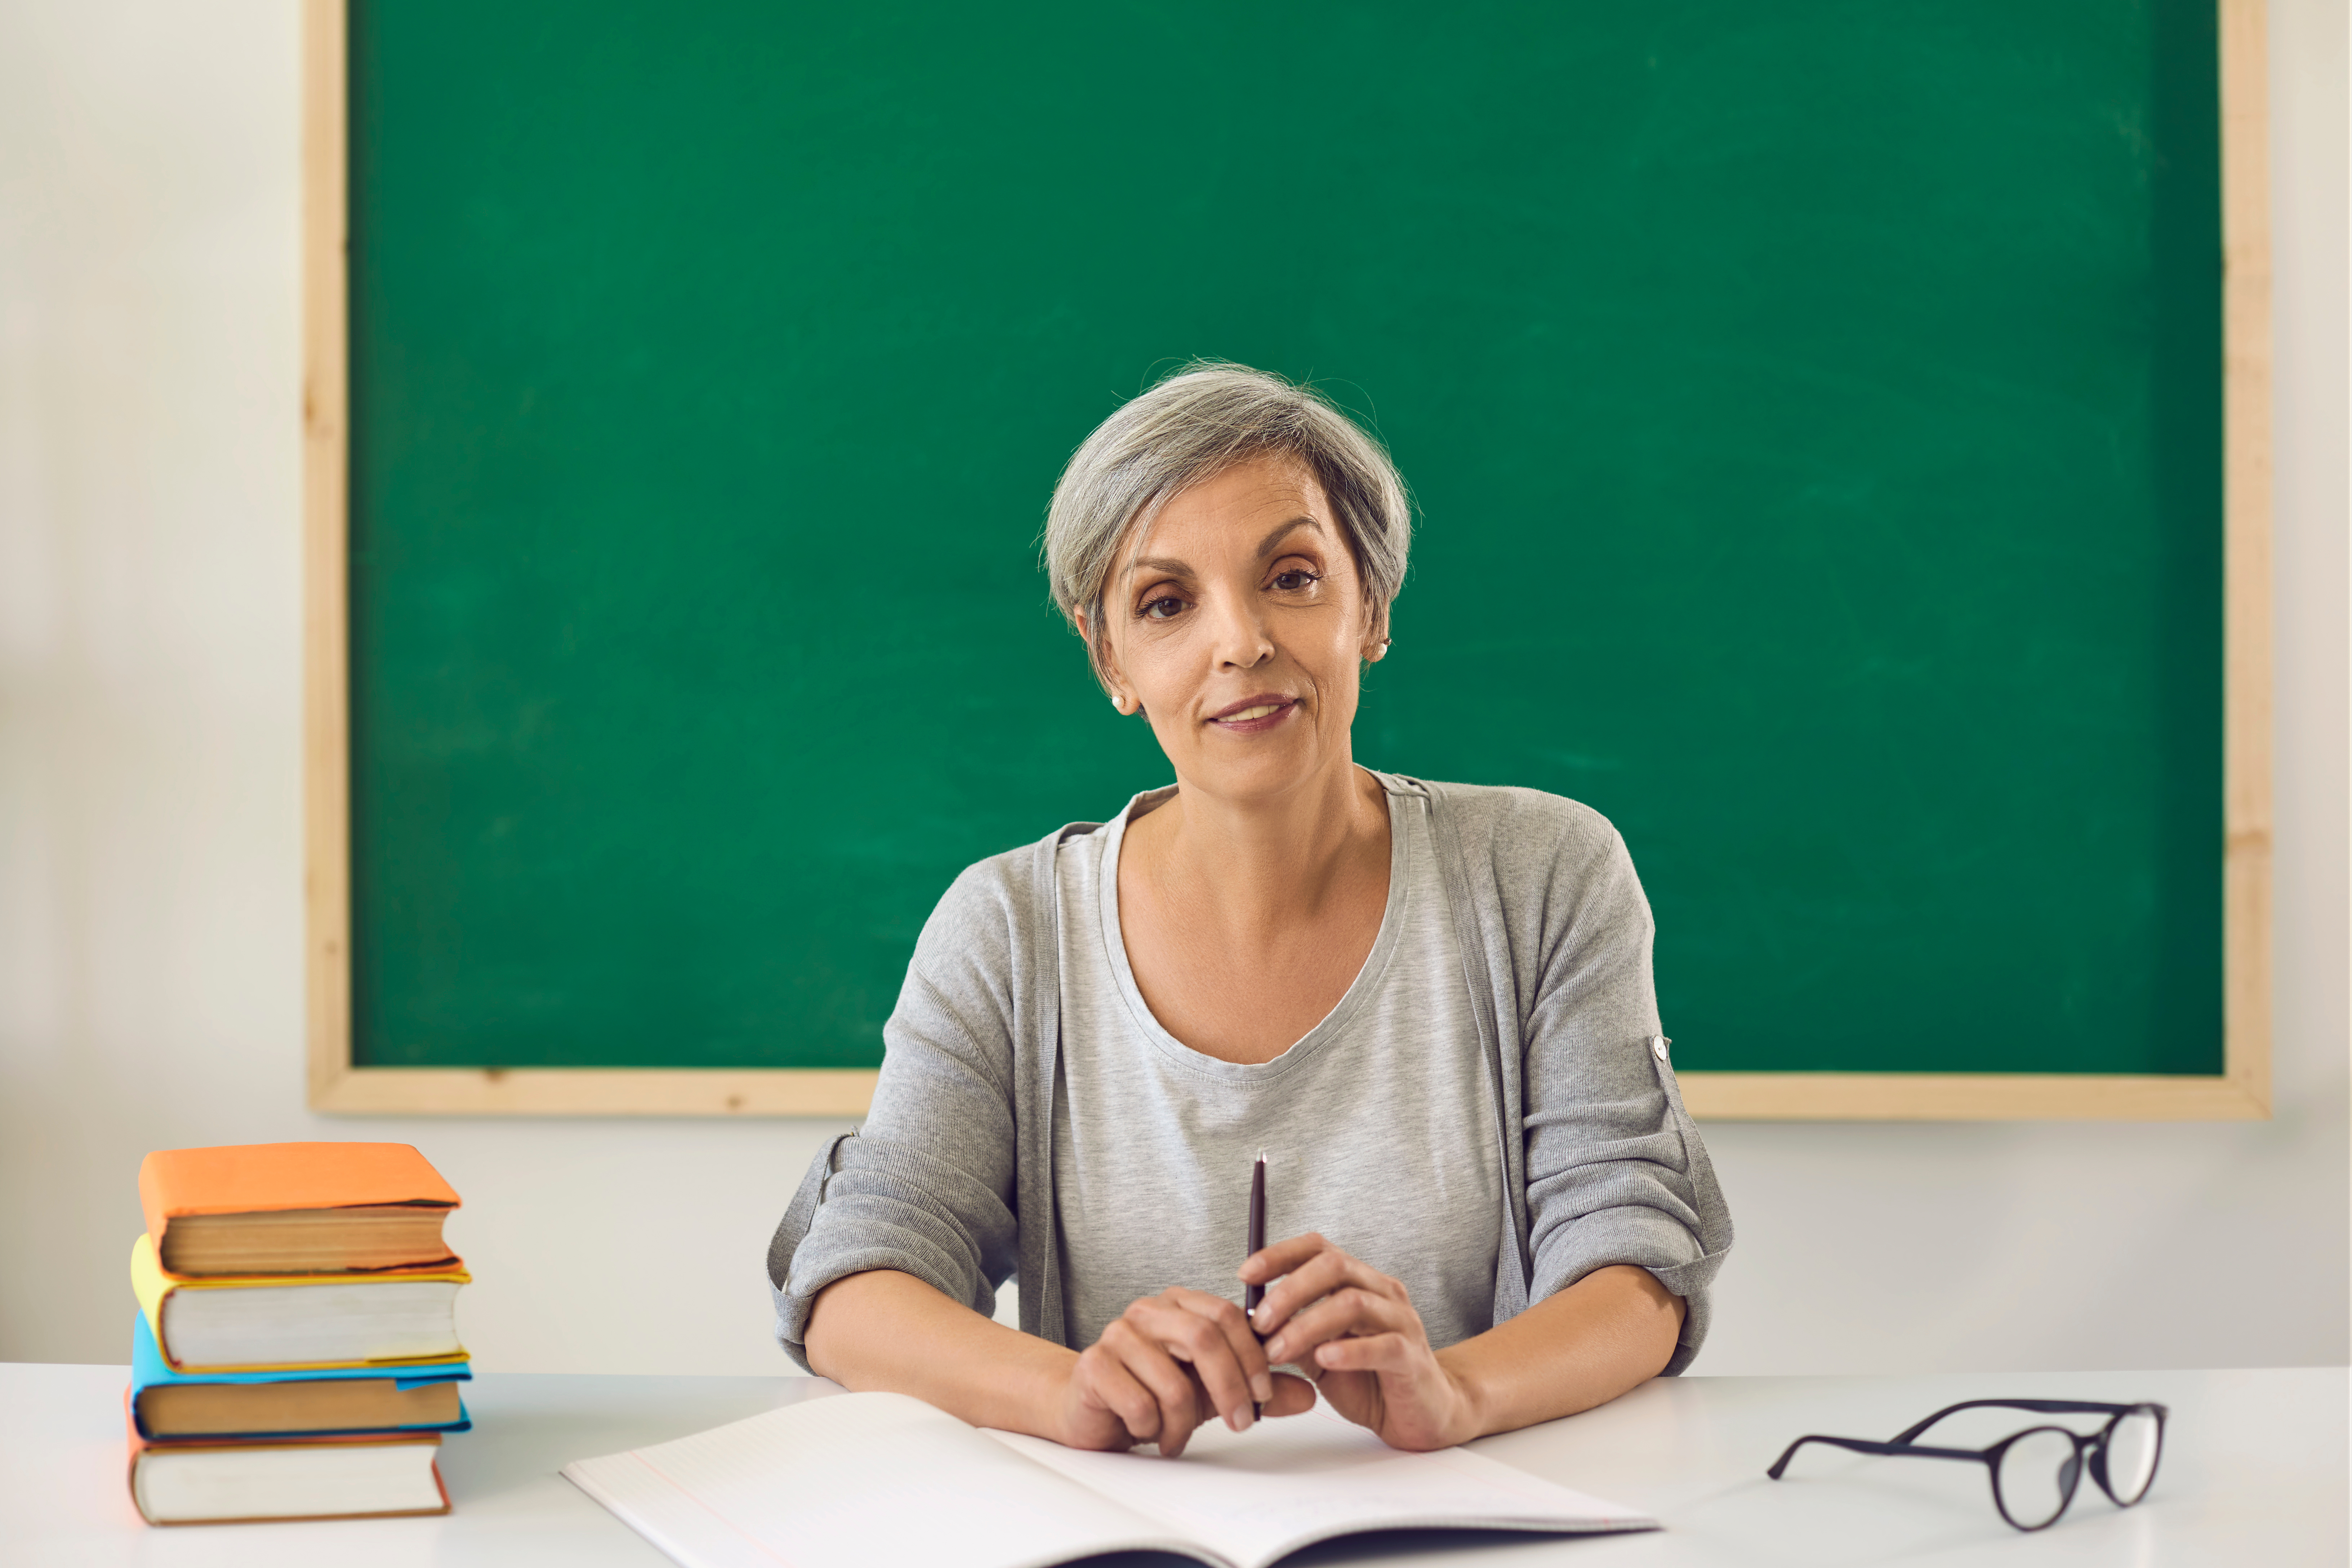 Teacher smiling from her desk | Source: Shutterstock